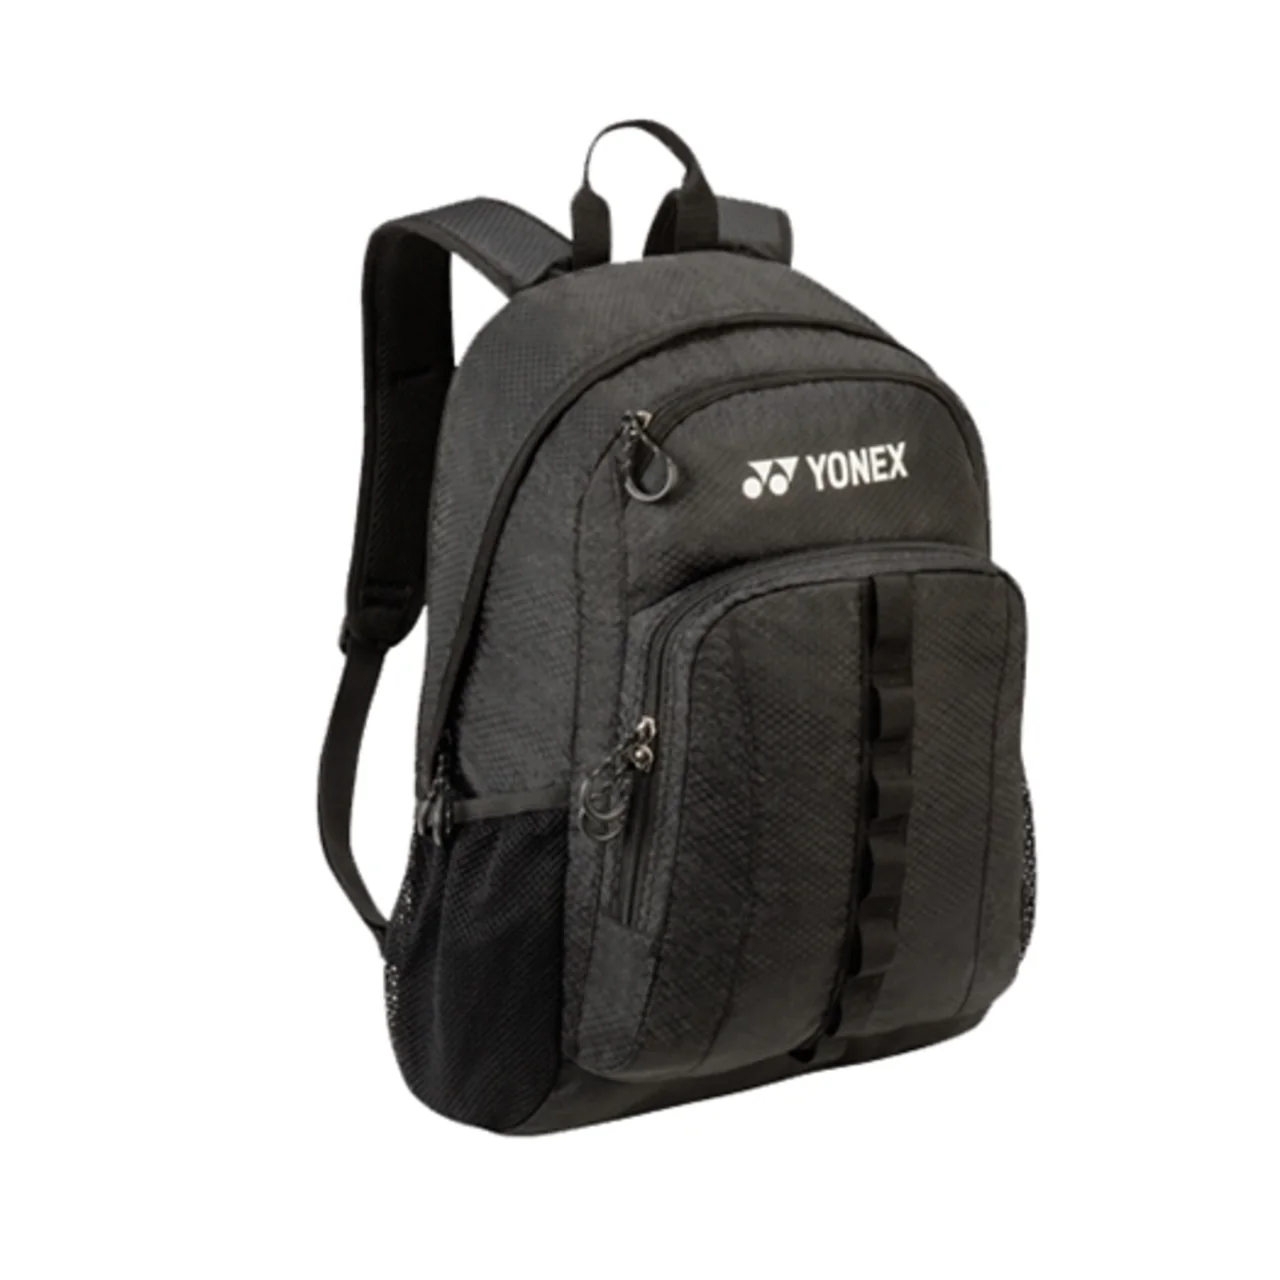 Yonex Backpack Black